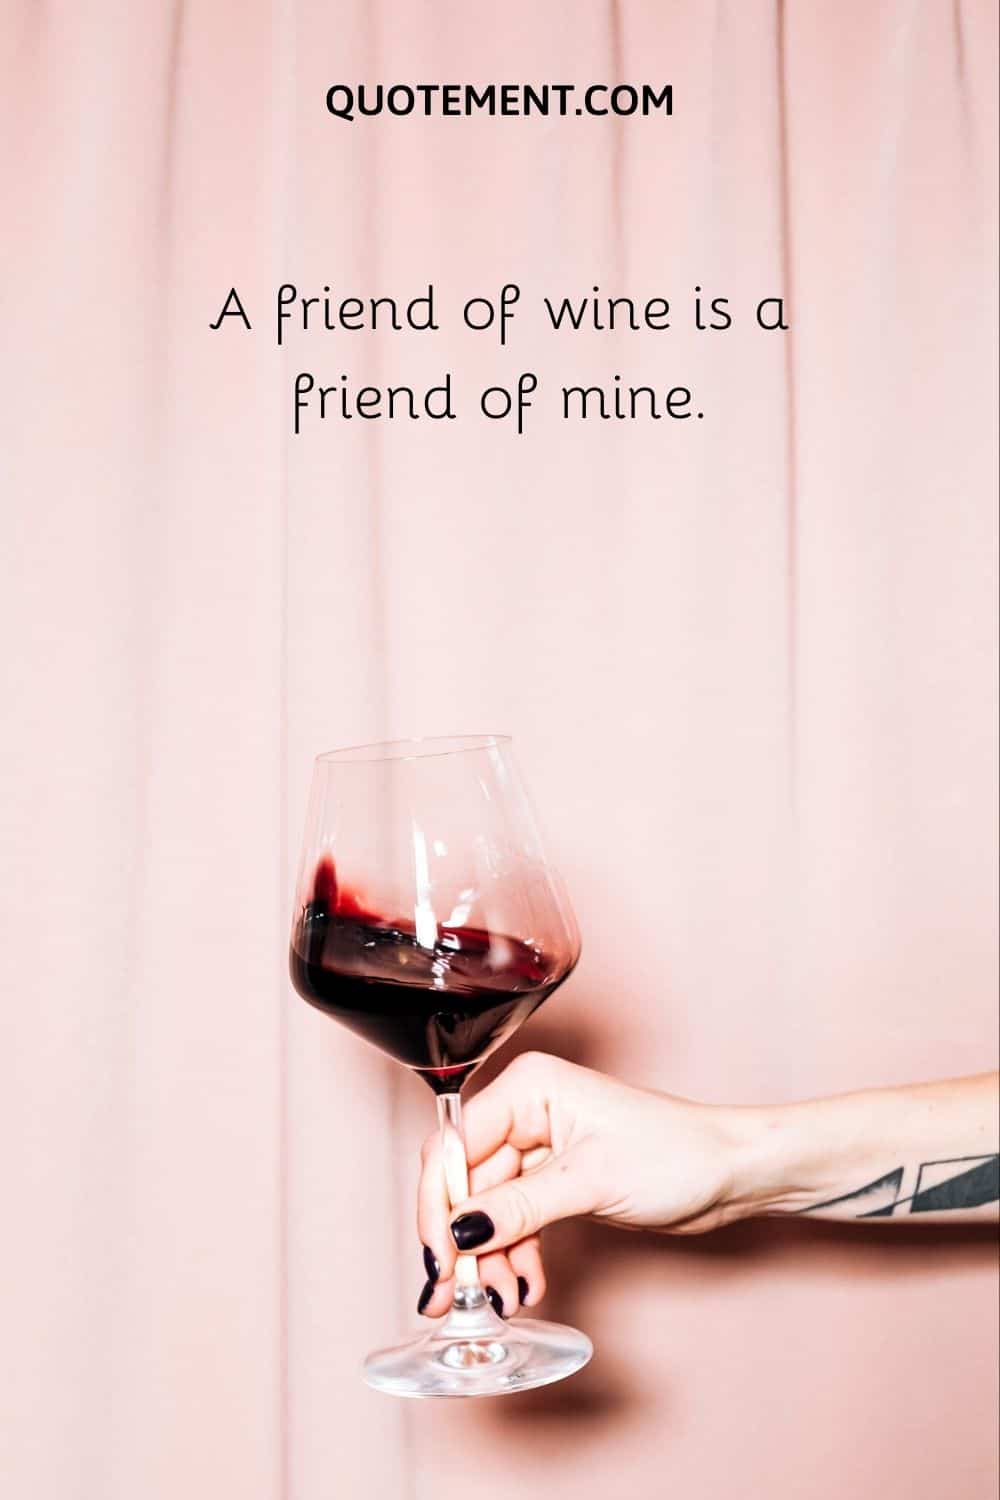 A friend of wine is a friend of mine